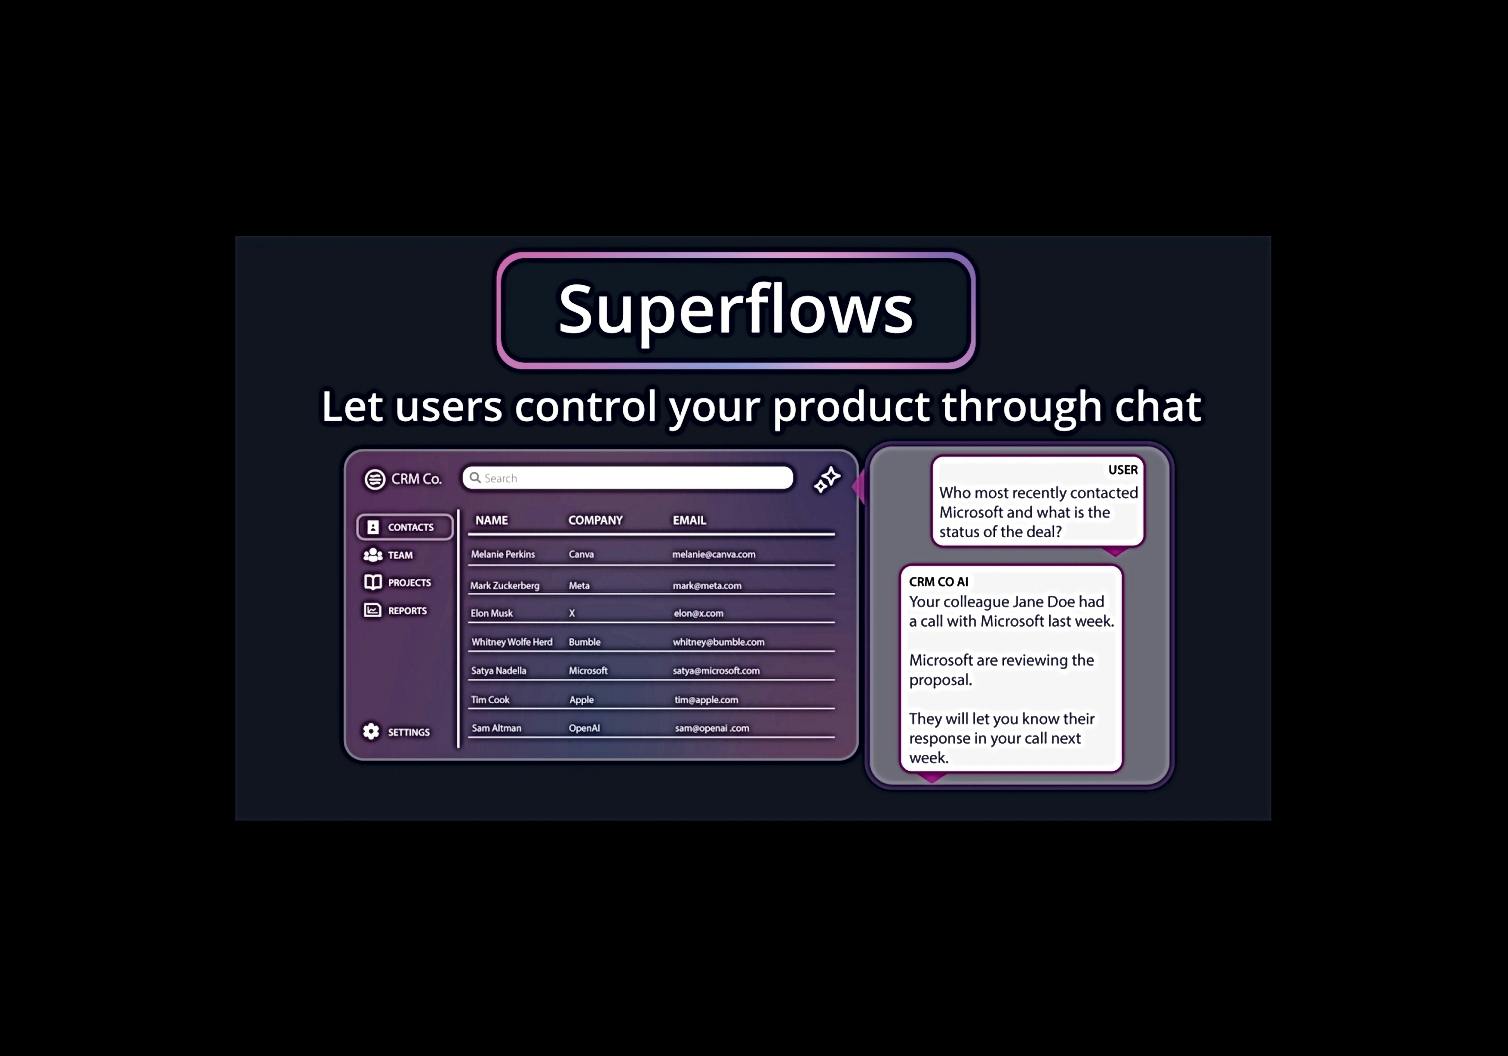 Superflows featured